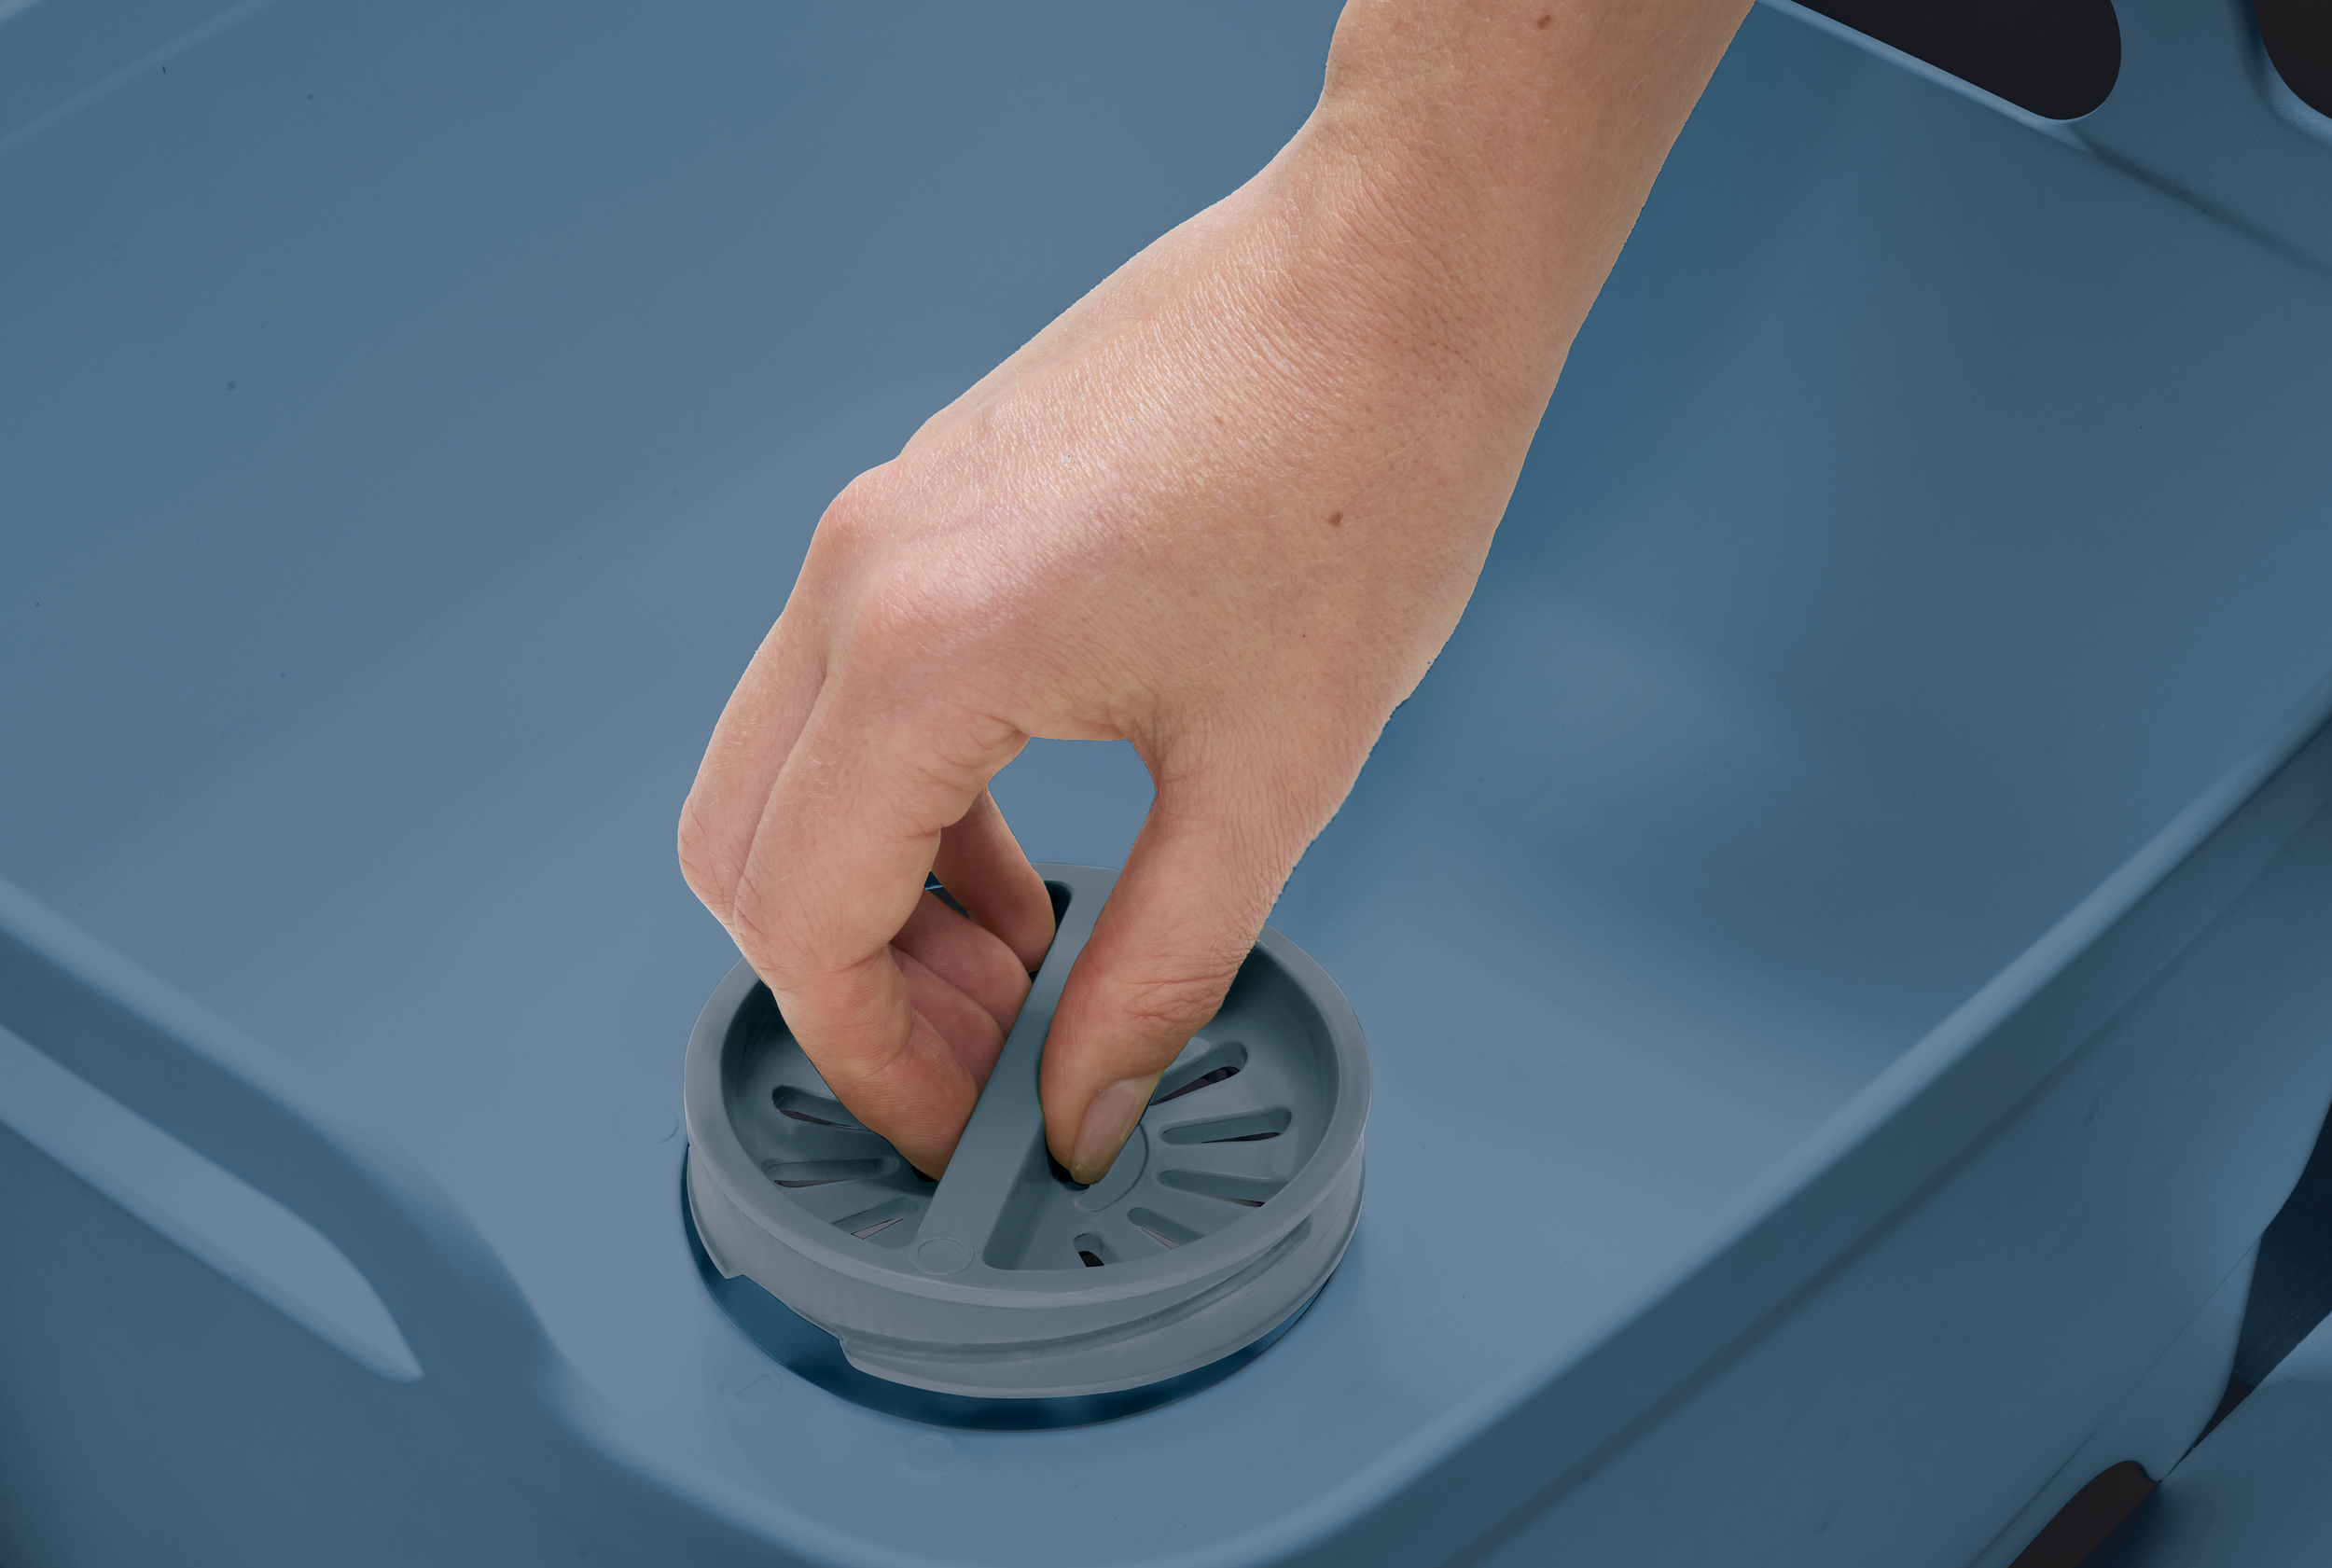 Joseph Joseph Wash&Drain Dishwashing Tub Review 2020